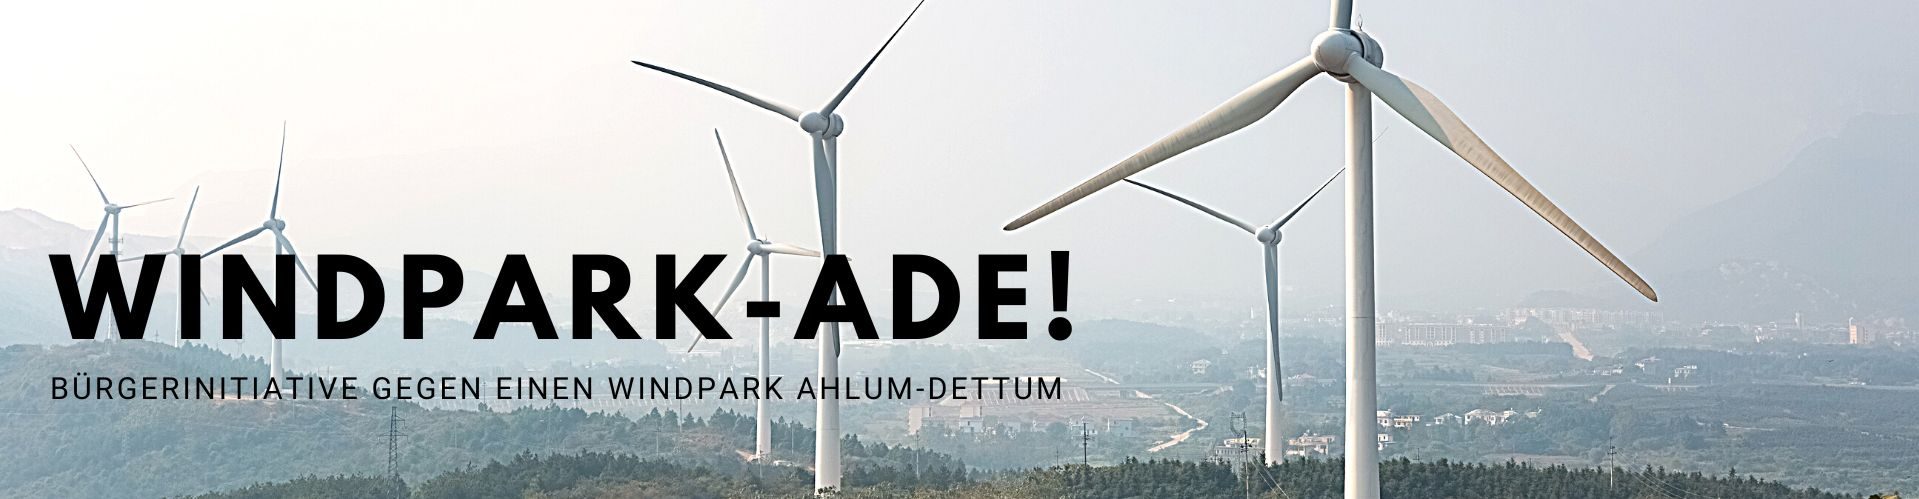 Windpark-ADe!